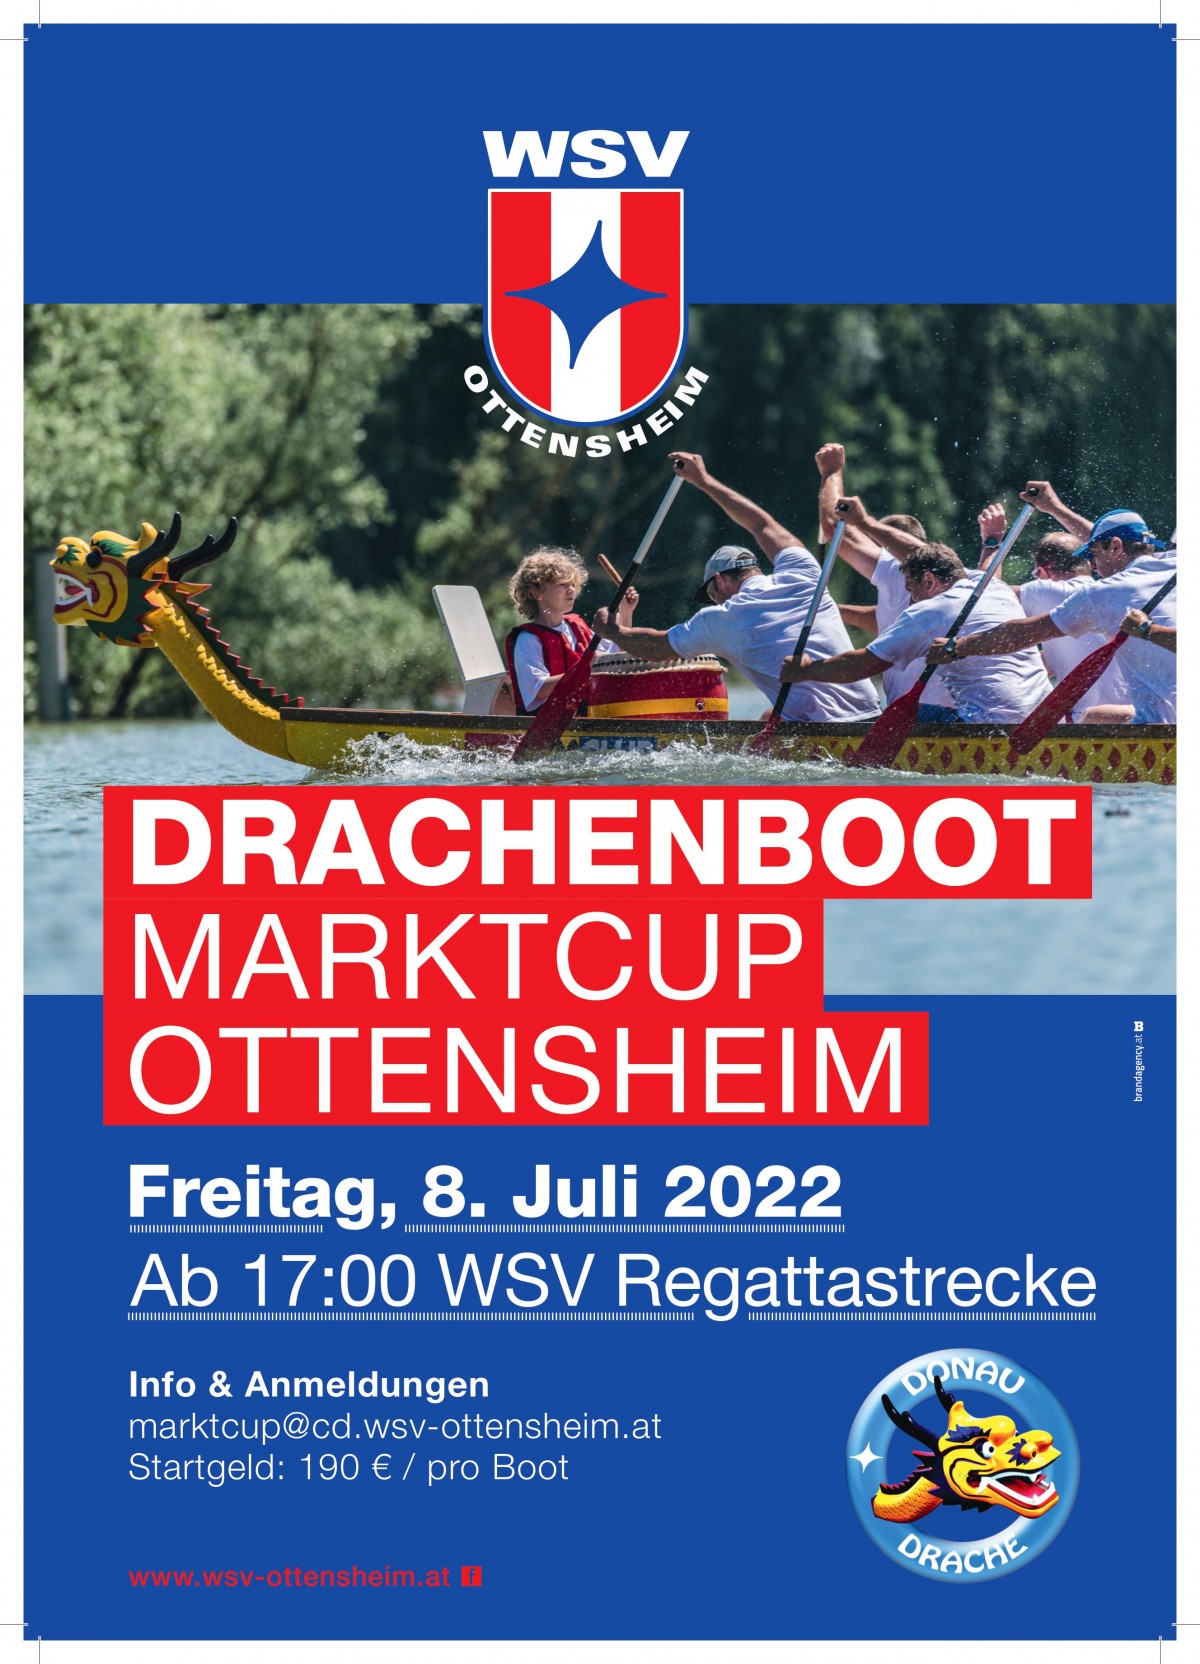 Donaudrache plakat2022 v2